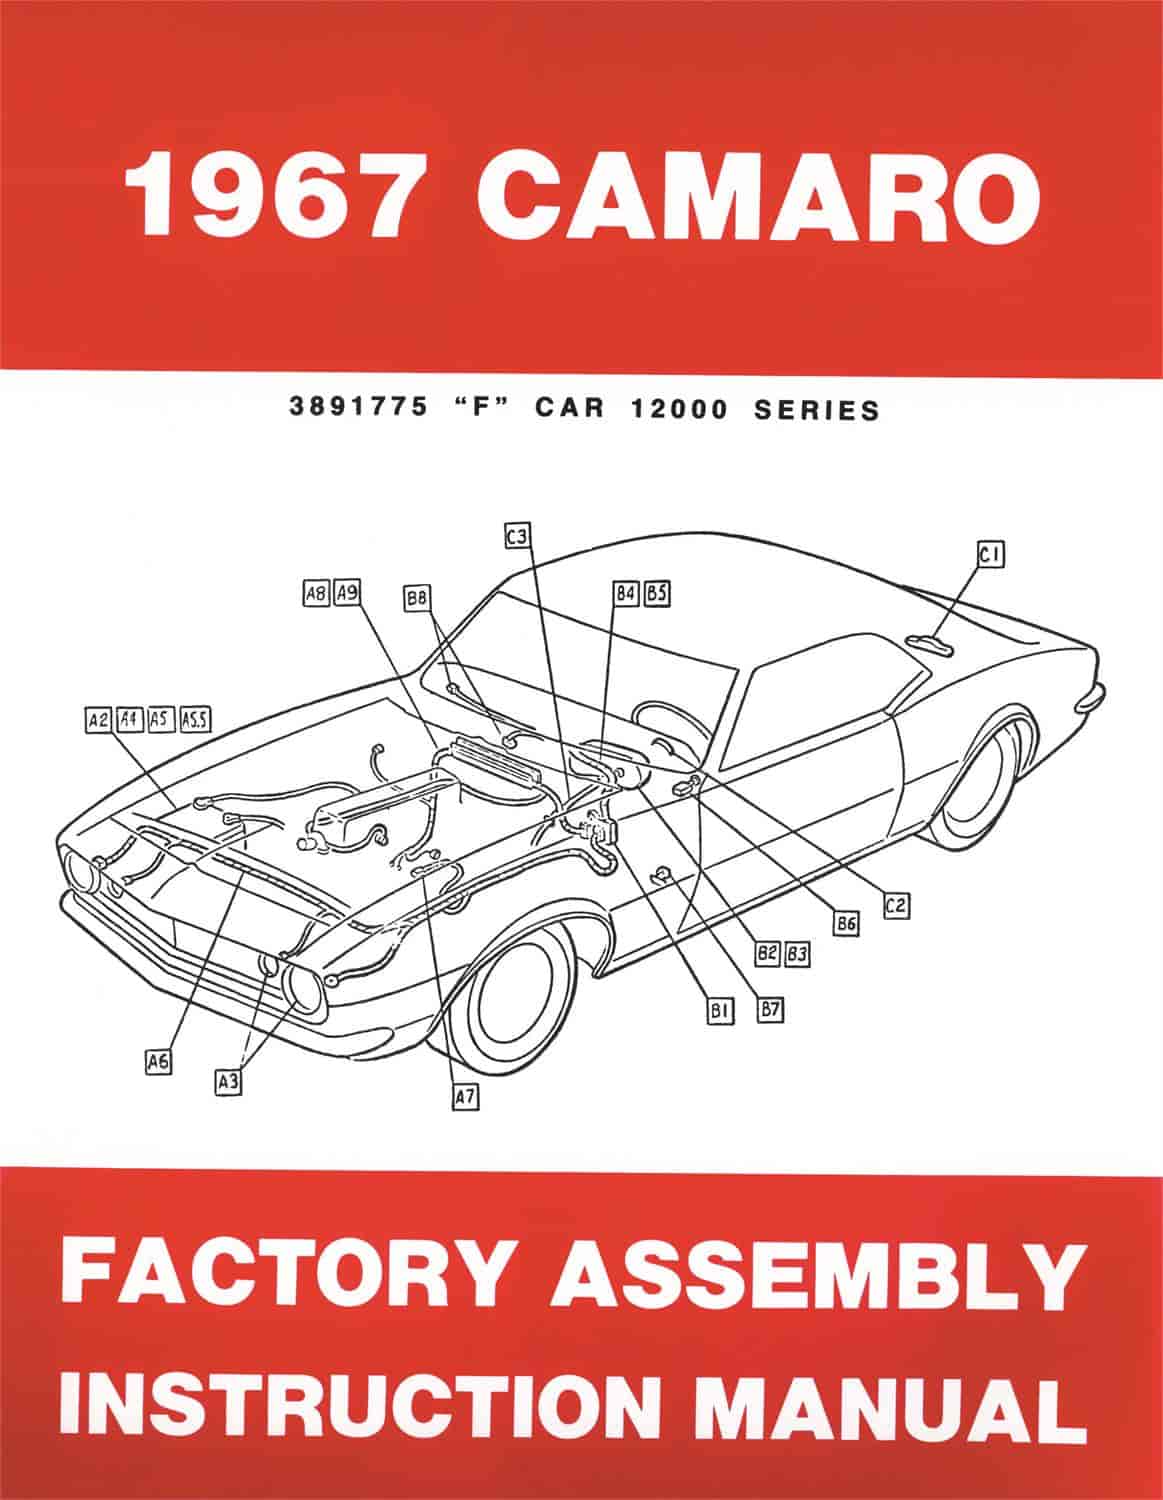 Factory Assembly Manual 1967 Chevy Camaro